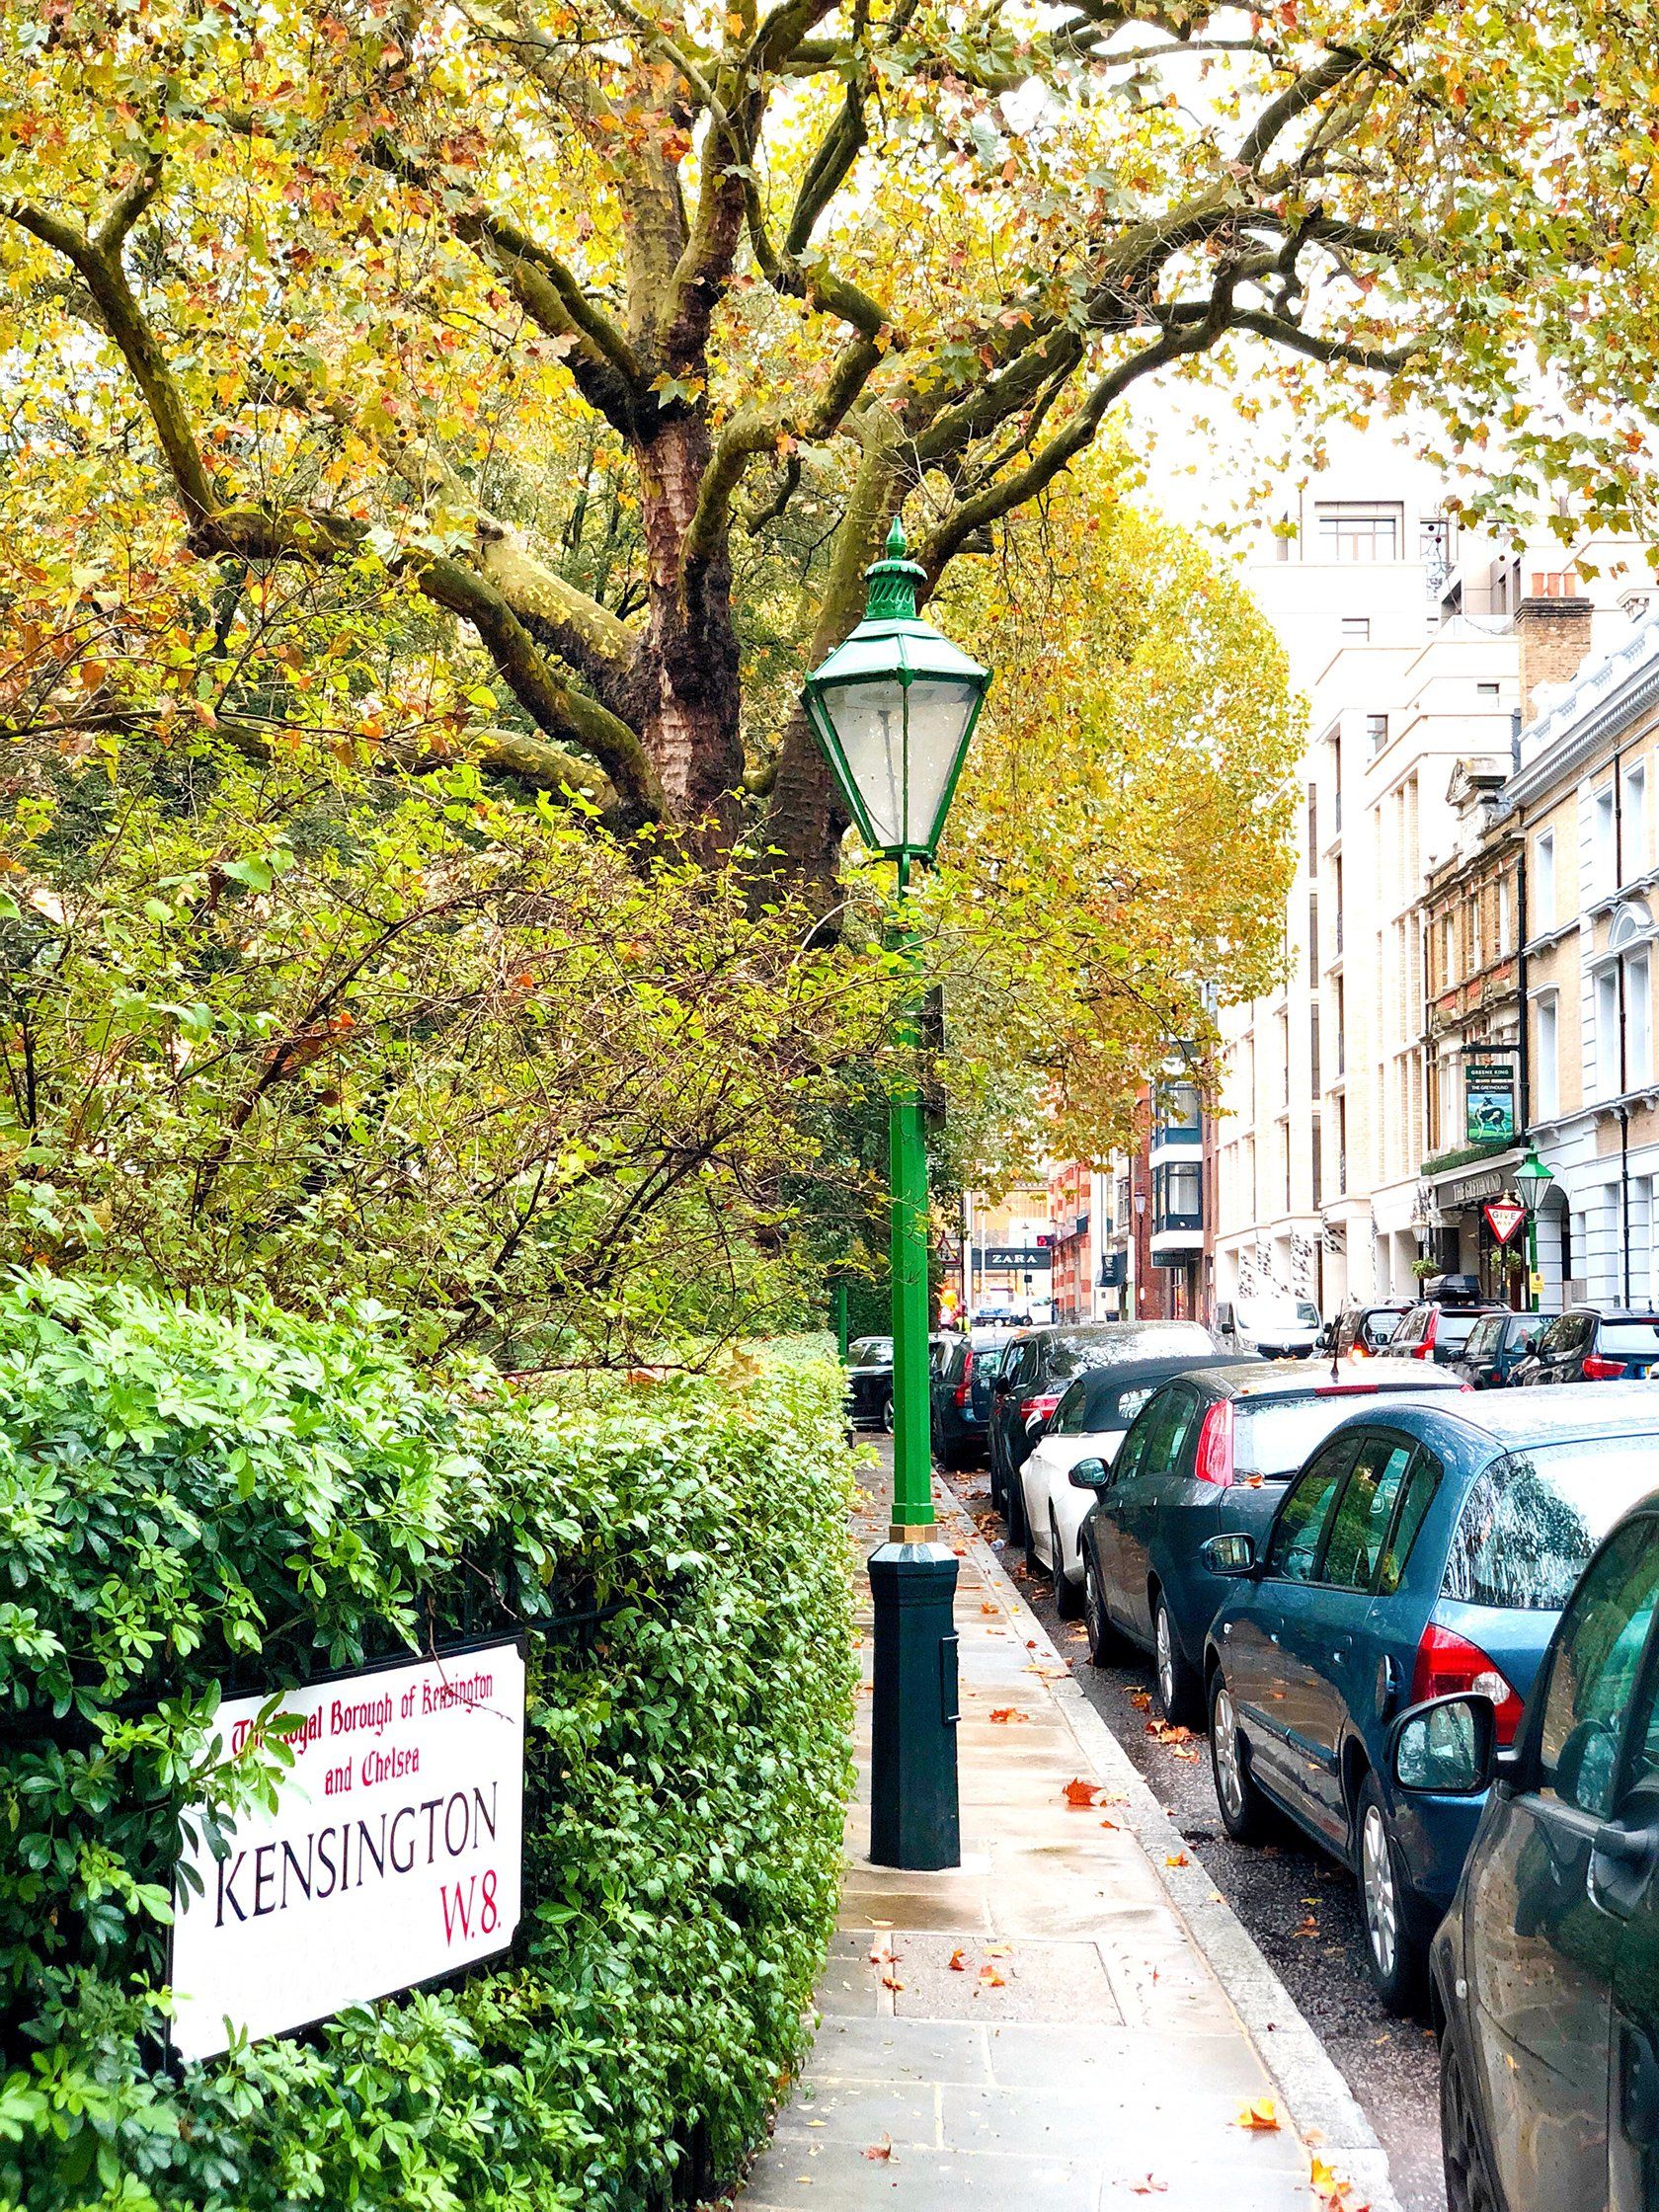 Kensington Gardens property for sale London